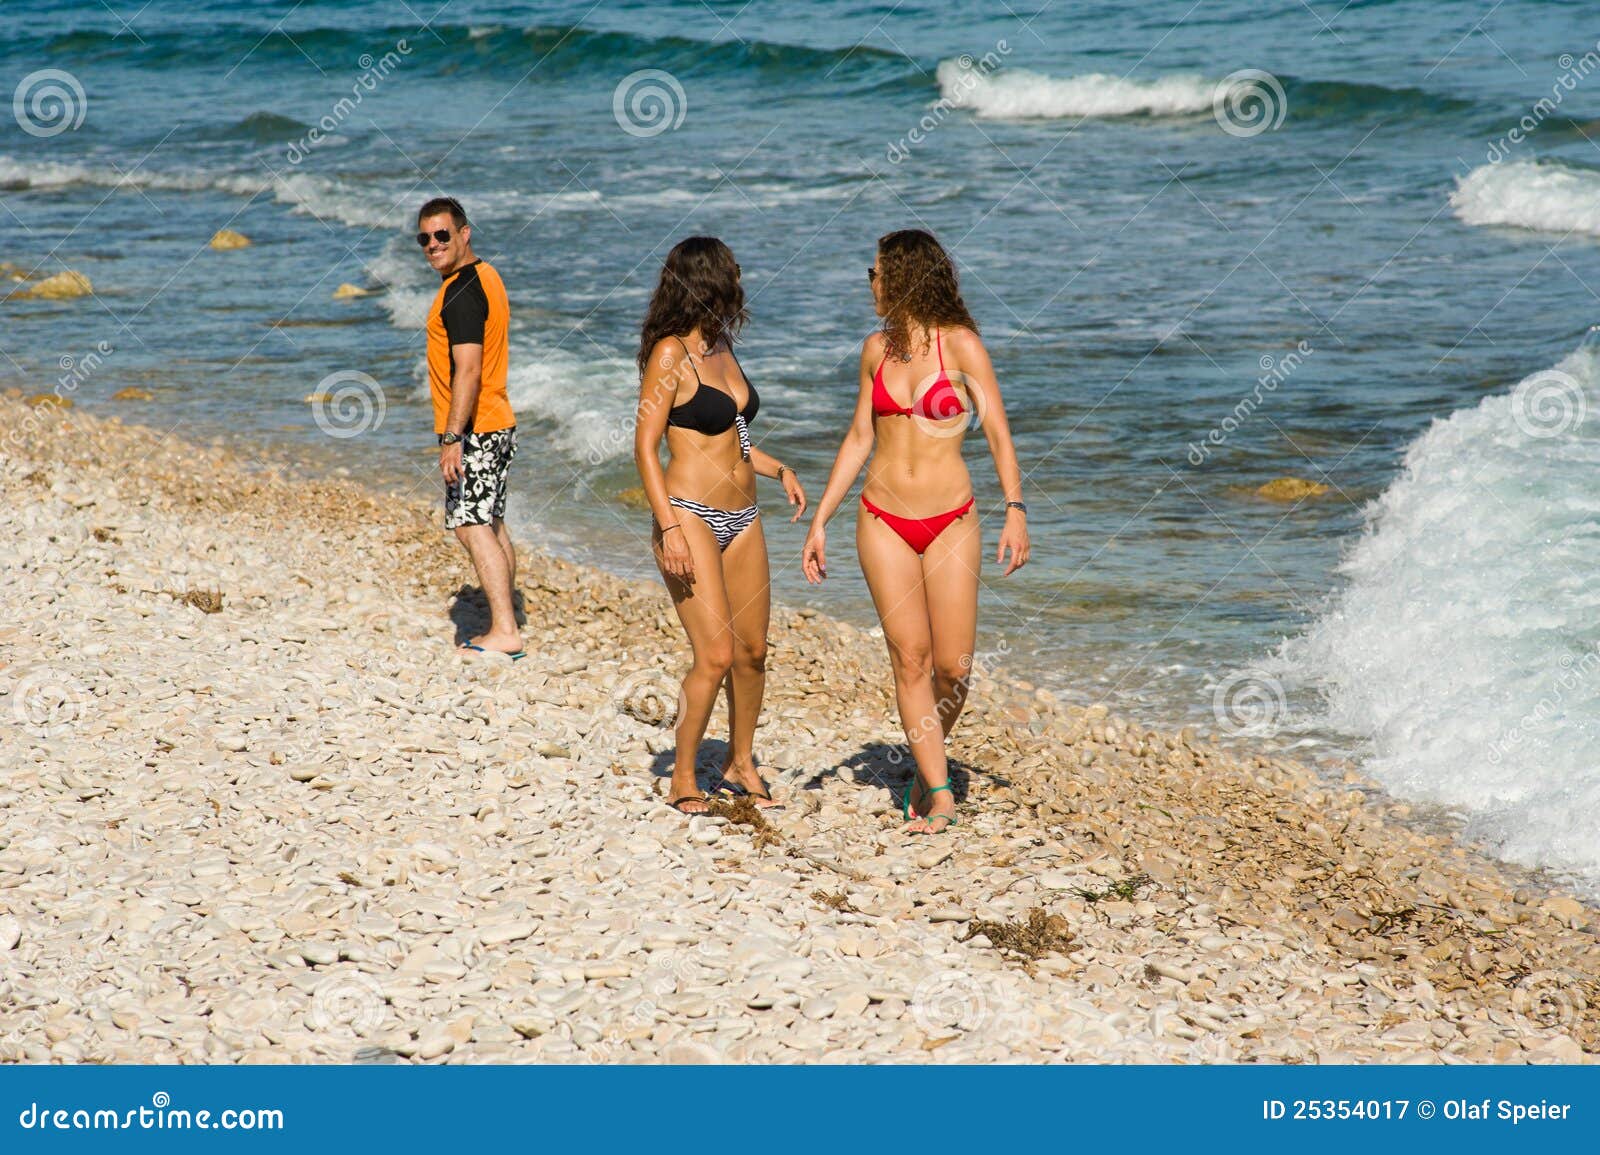 beach nude sex voyeur